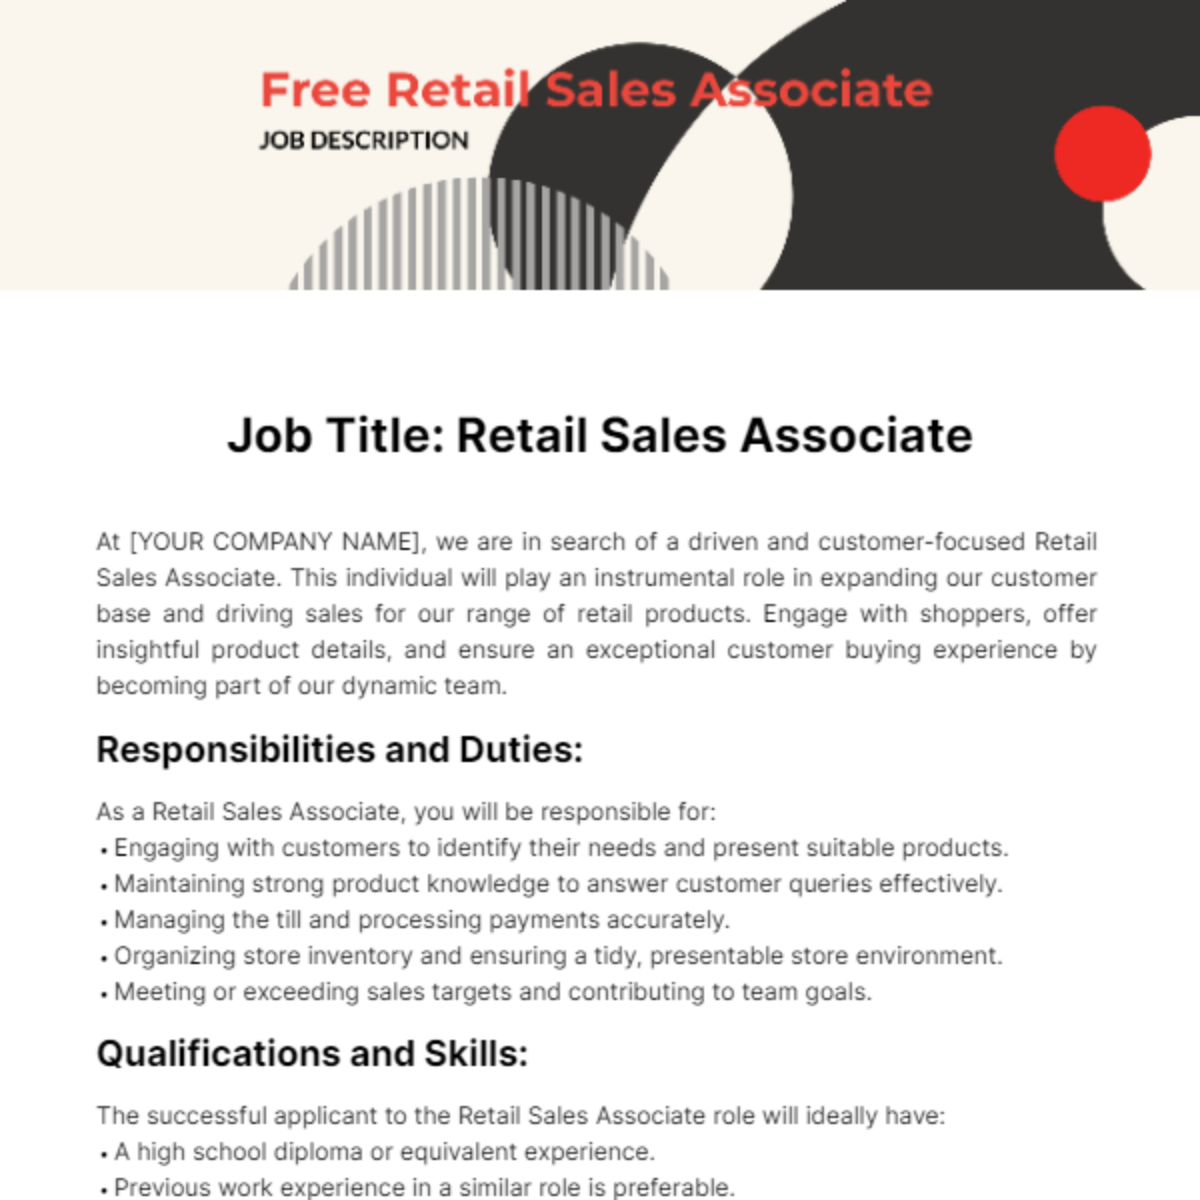 Free Retail Sales Associate Job Description Template